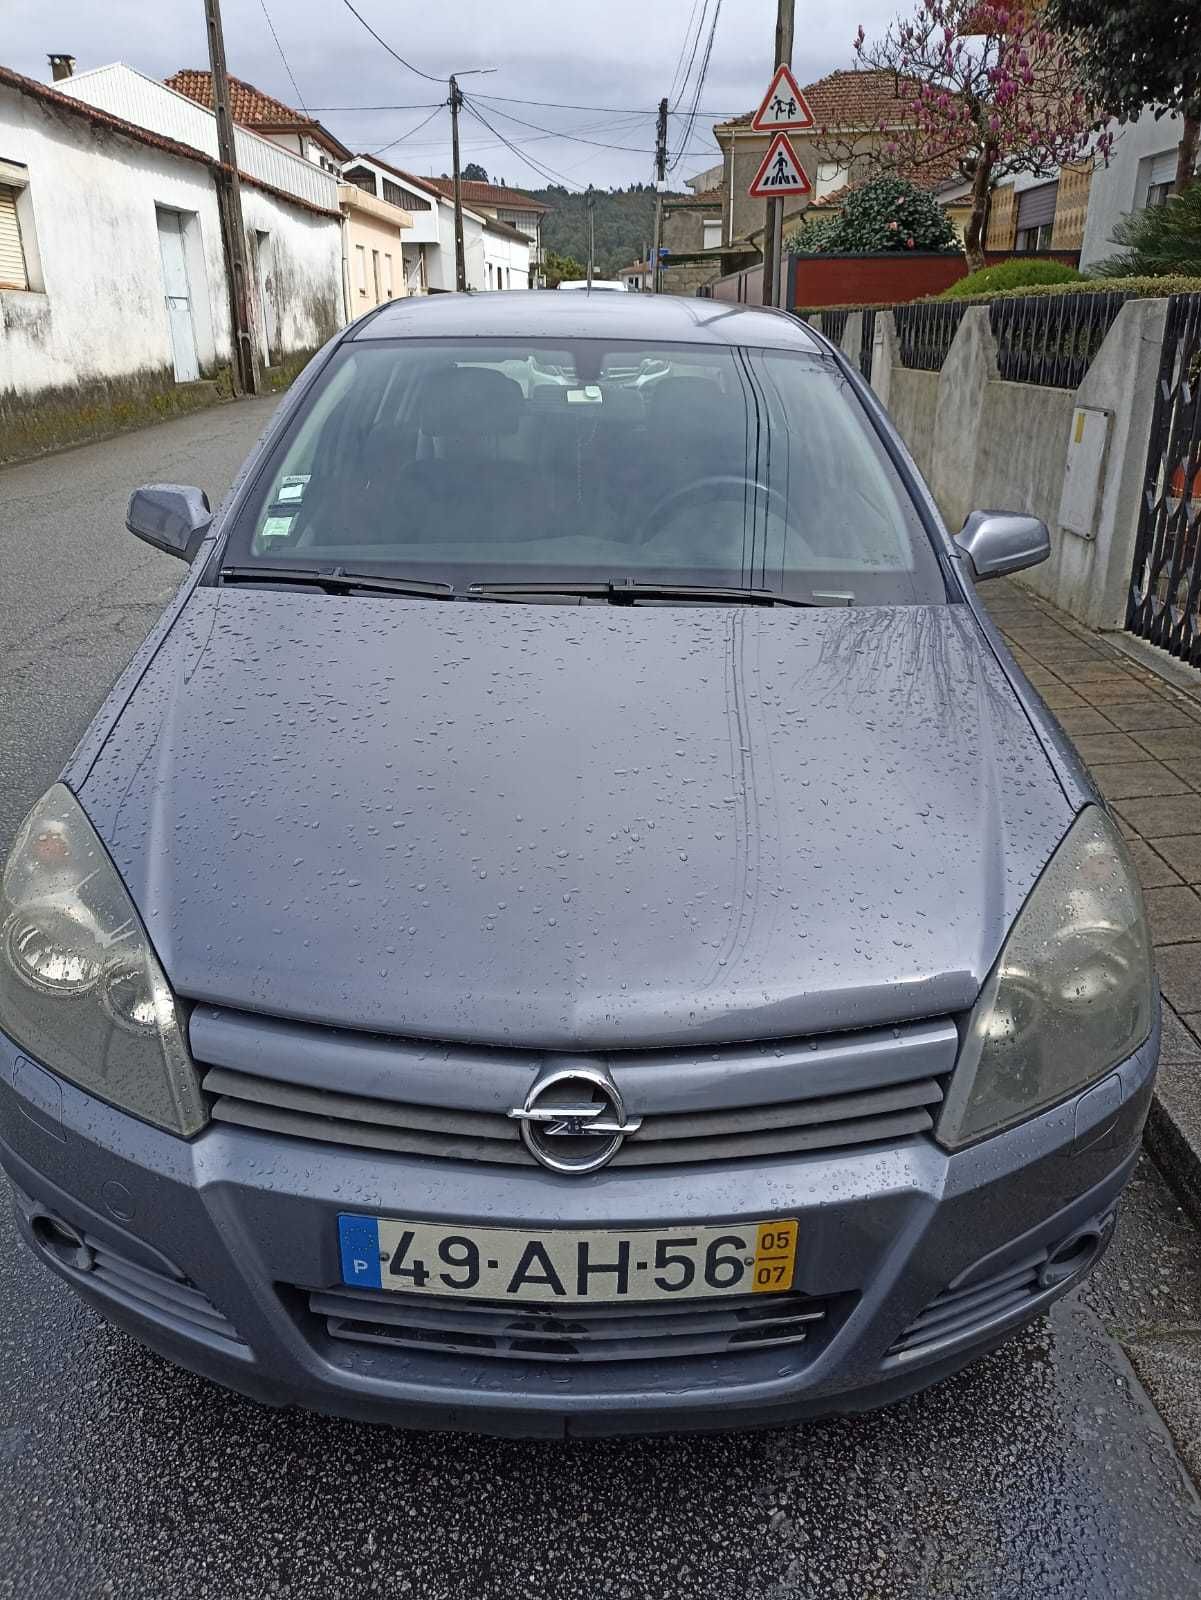 Carro Opel Astra h 2005